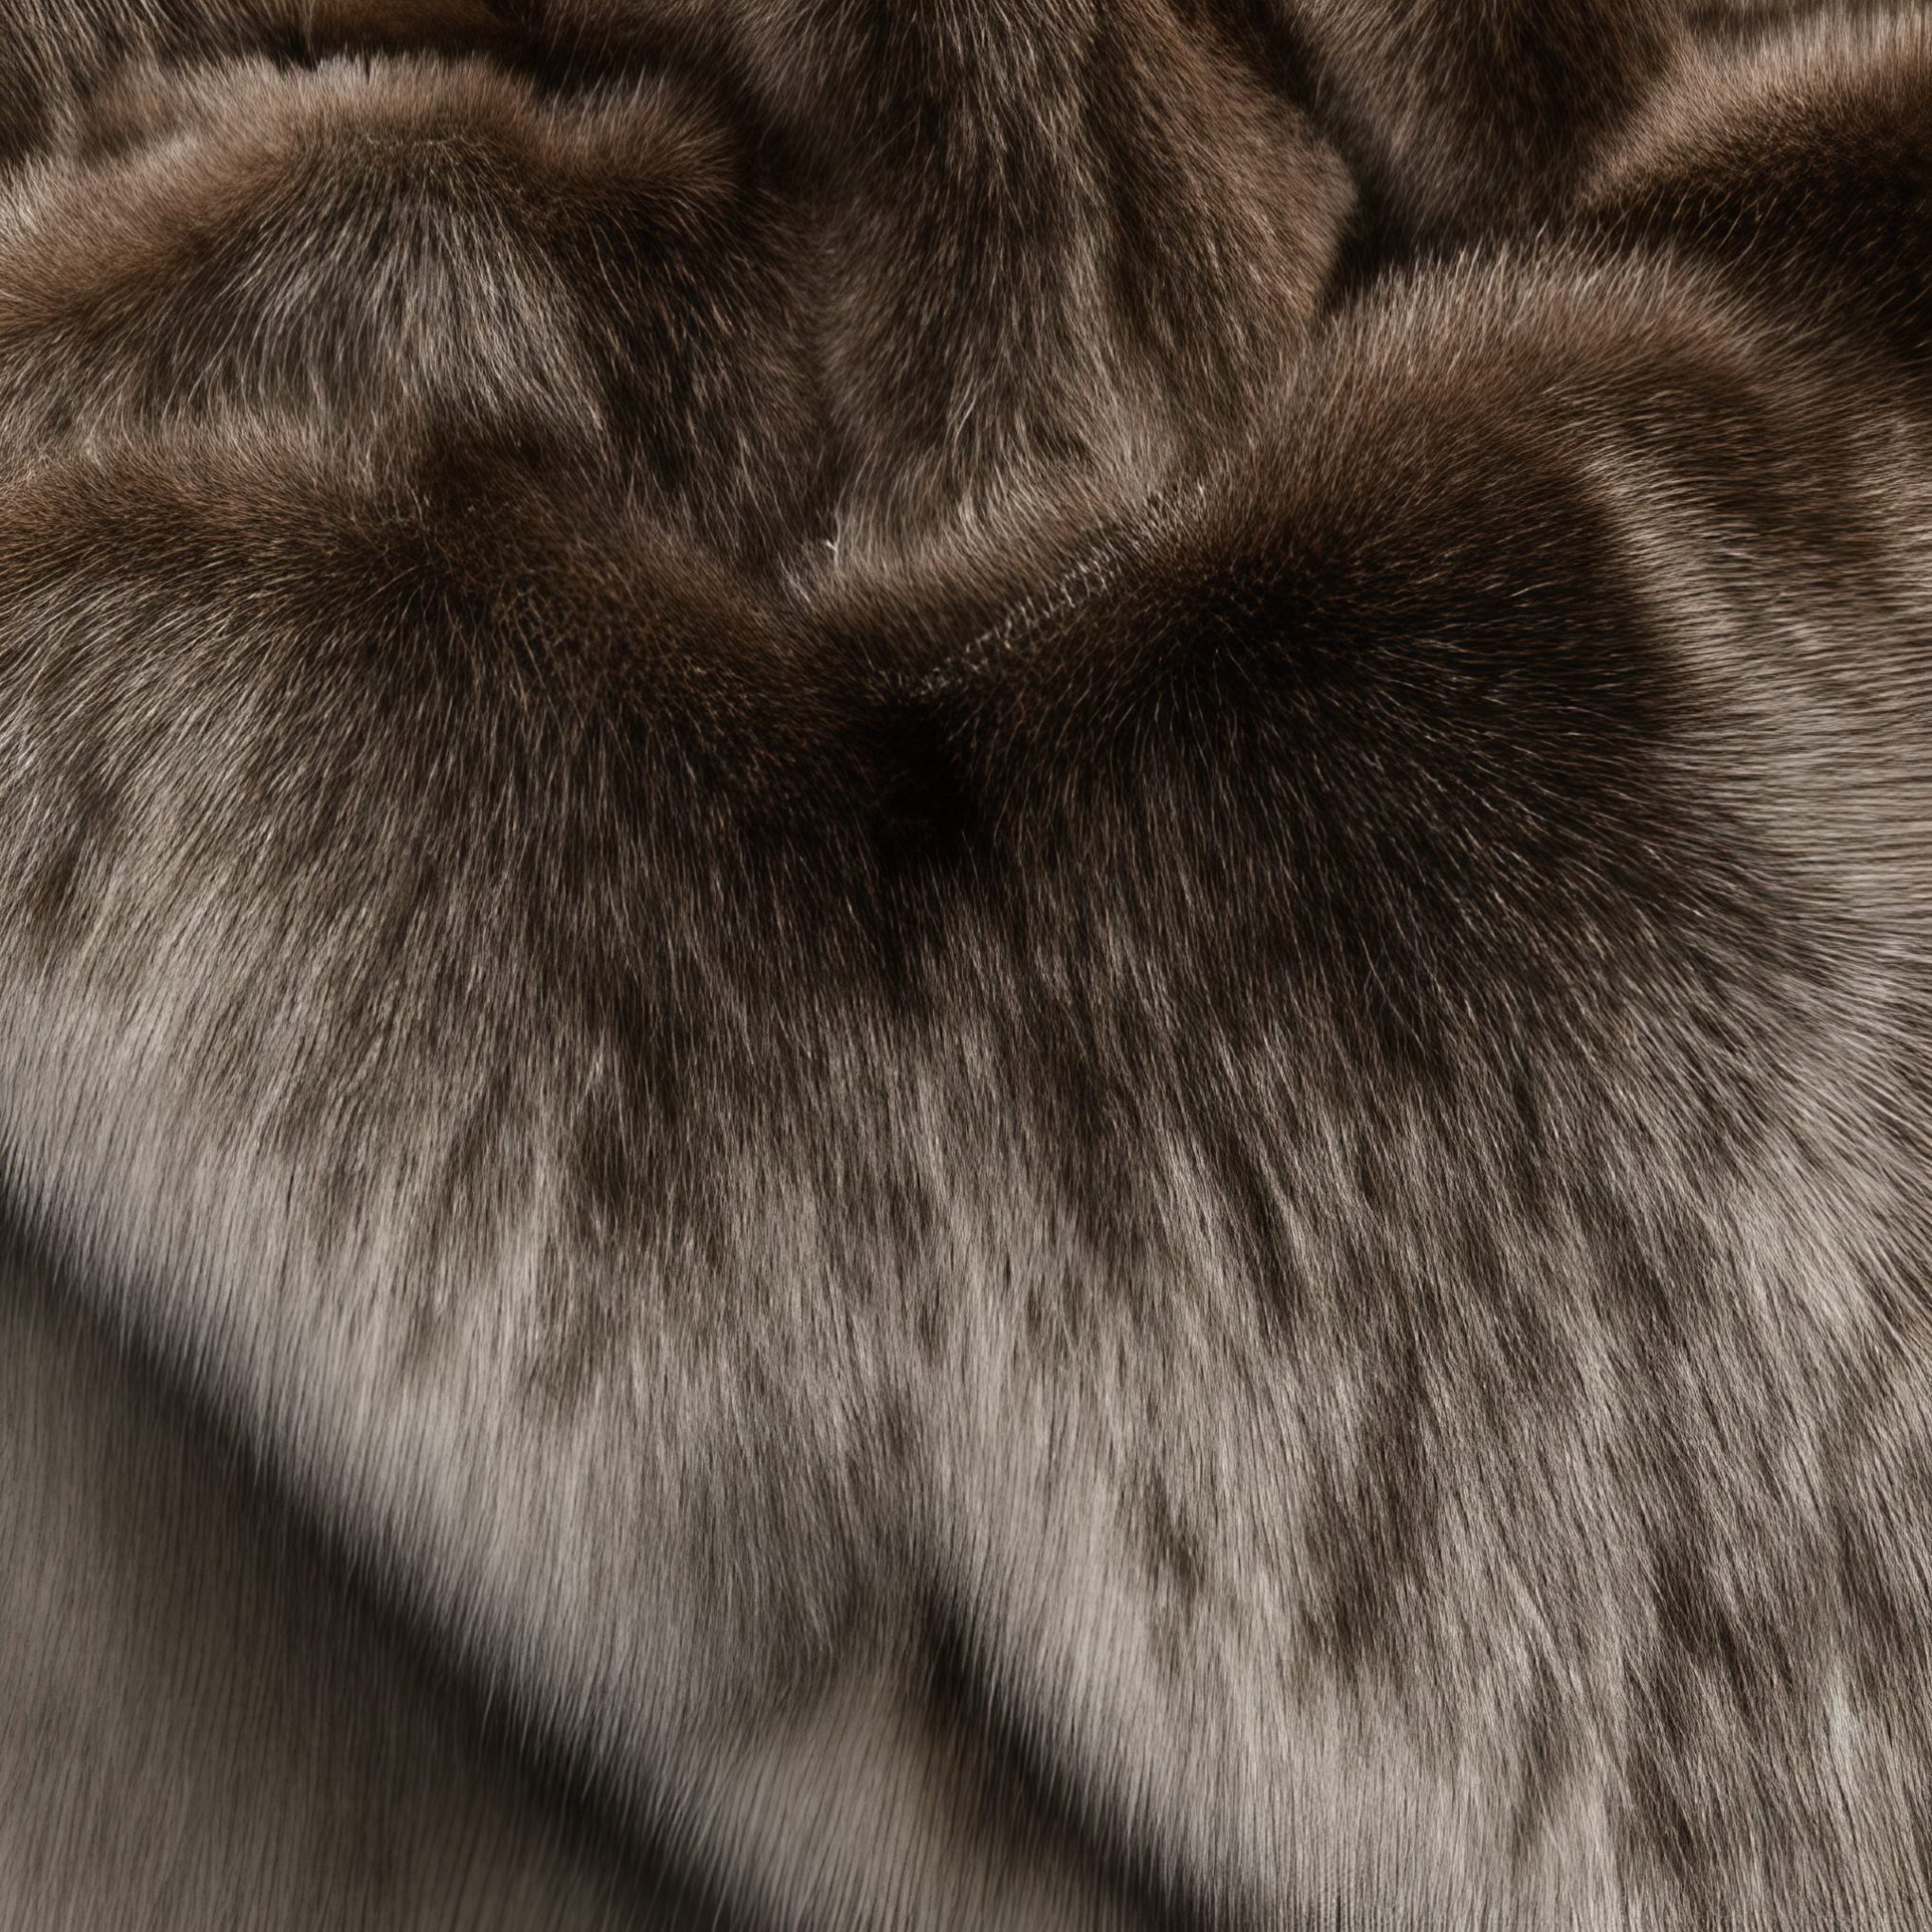 Brown rabbit fur free stock image download